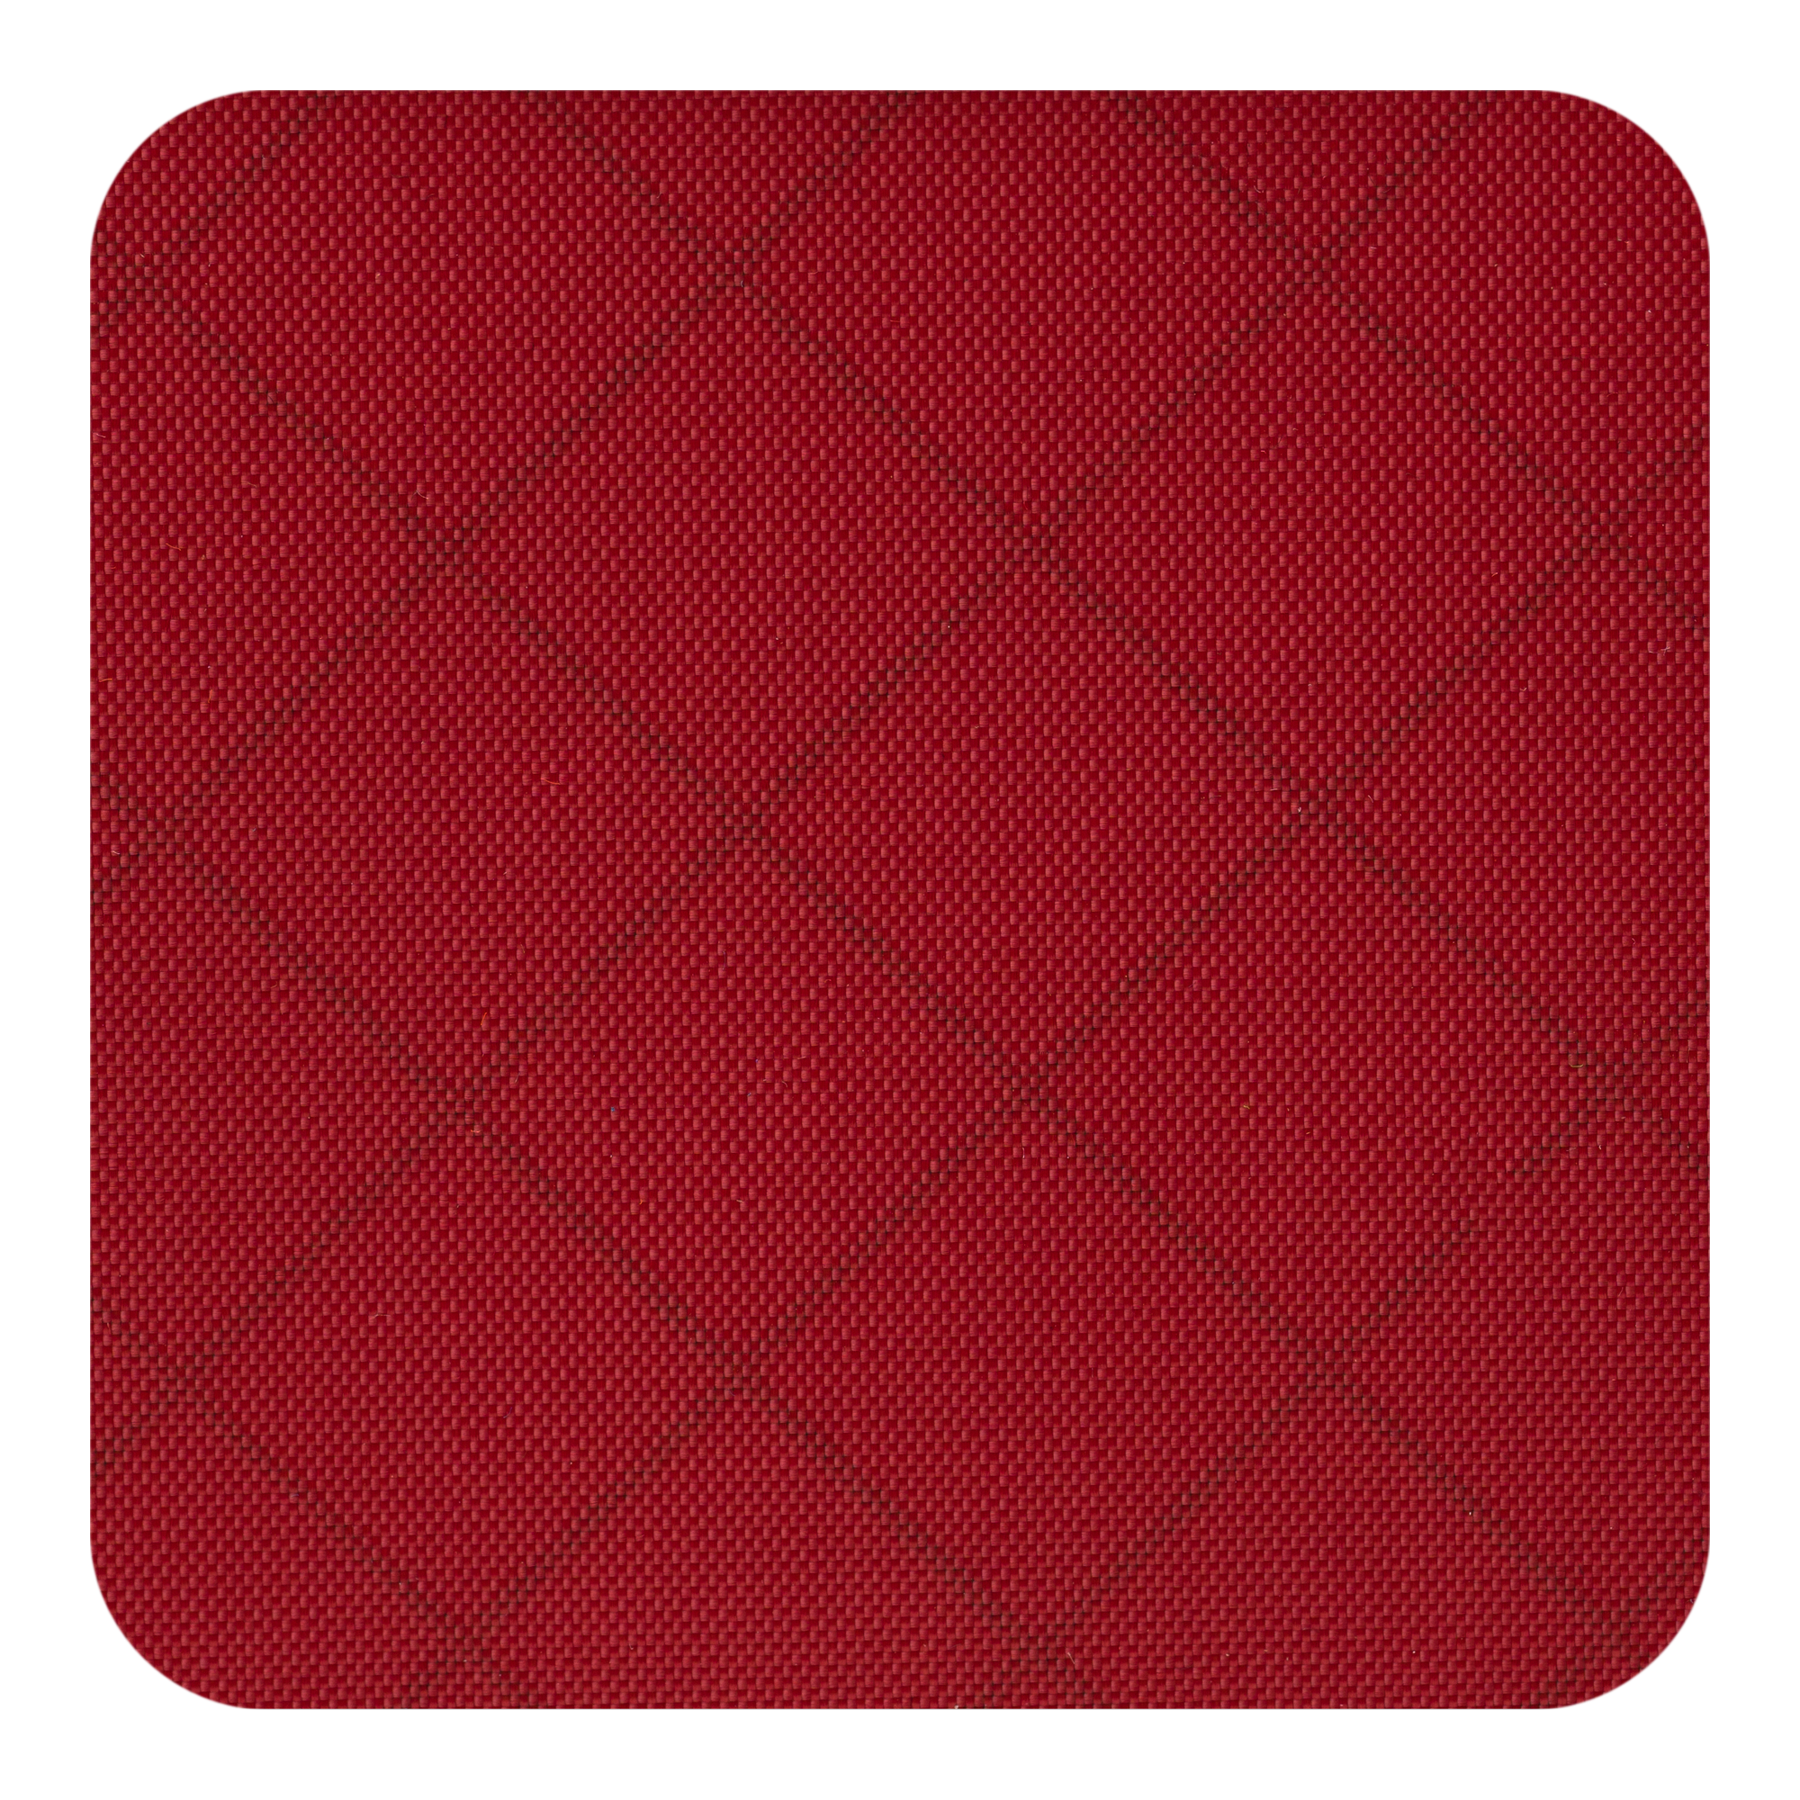 70D Ripstop Nylon- Red